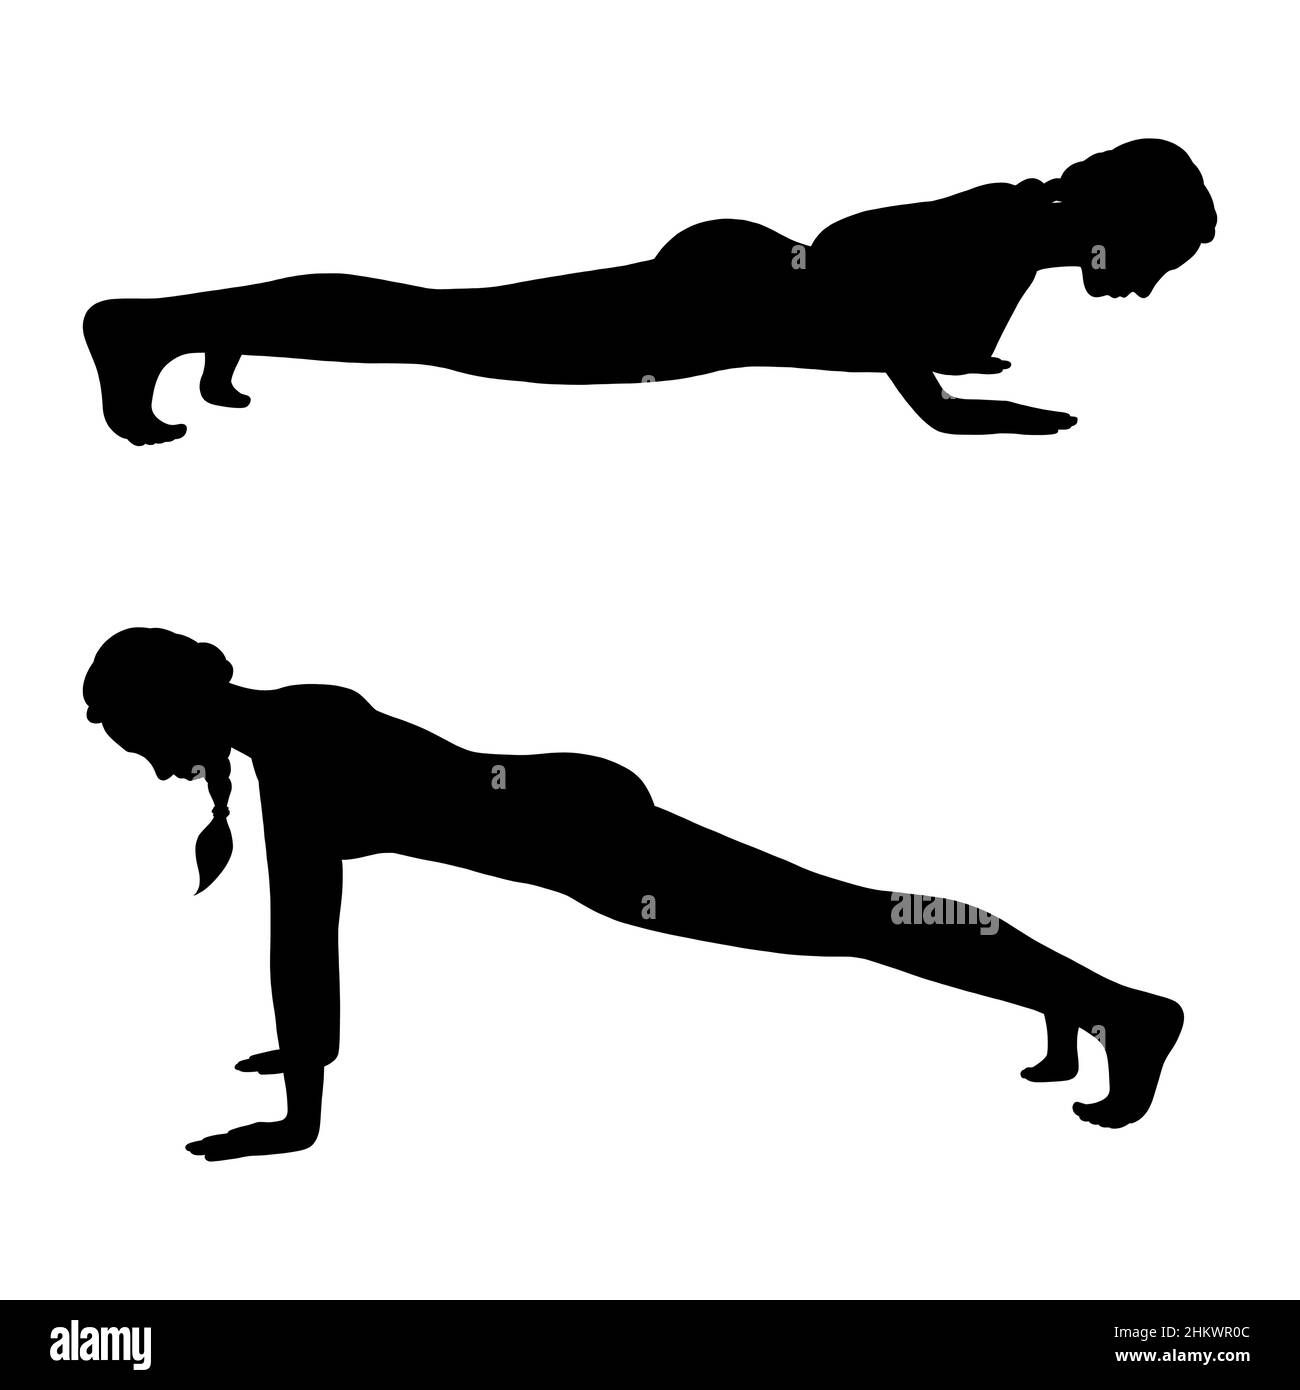 plank silhouette